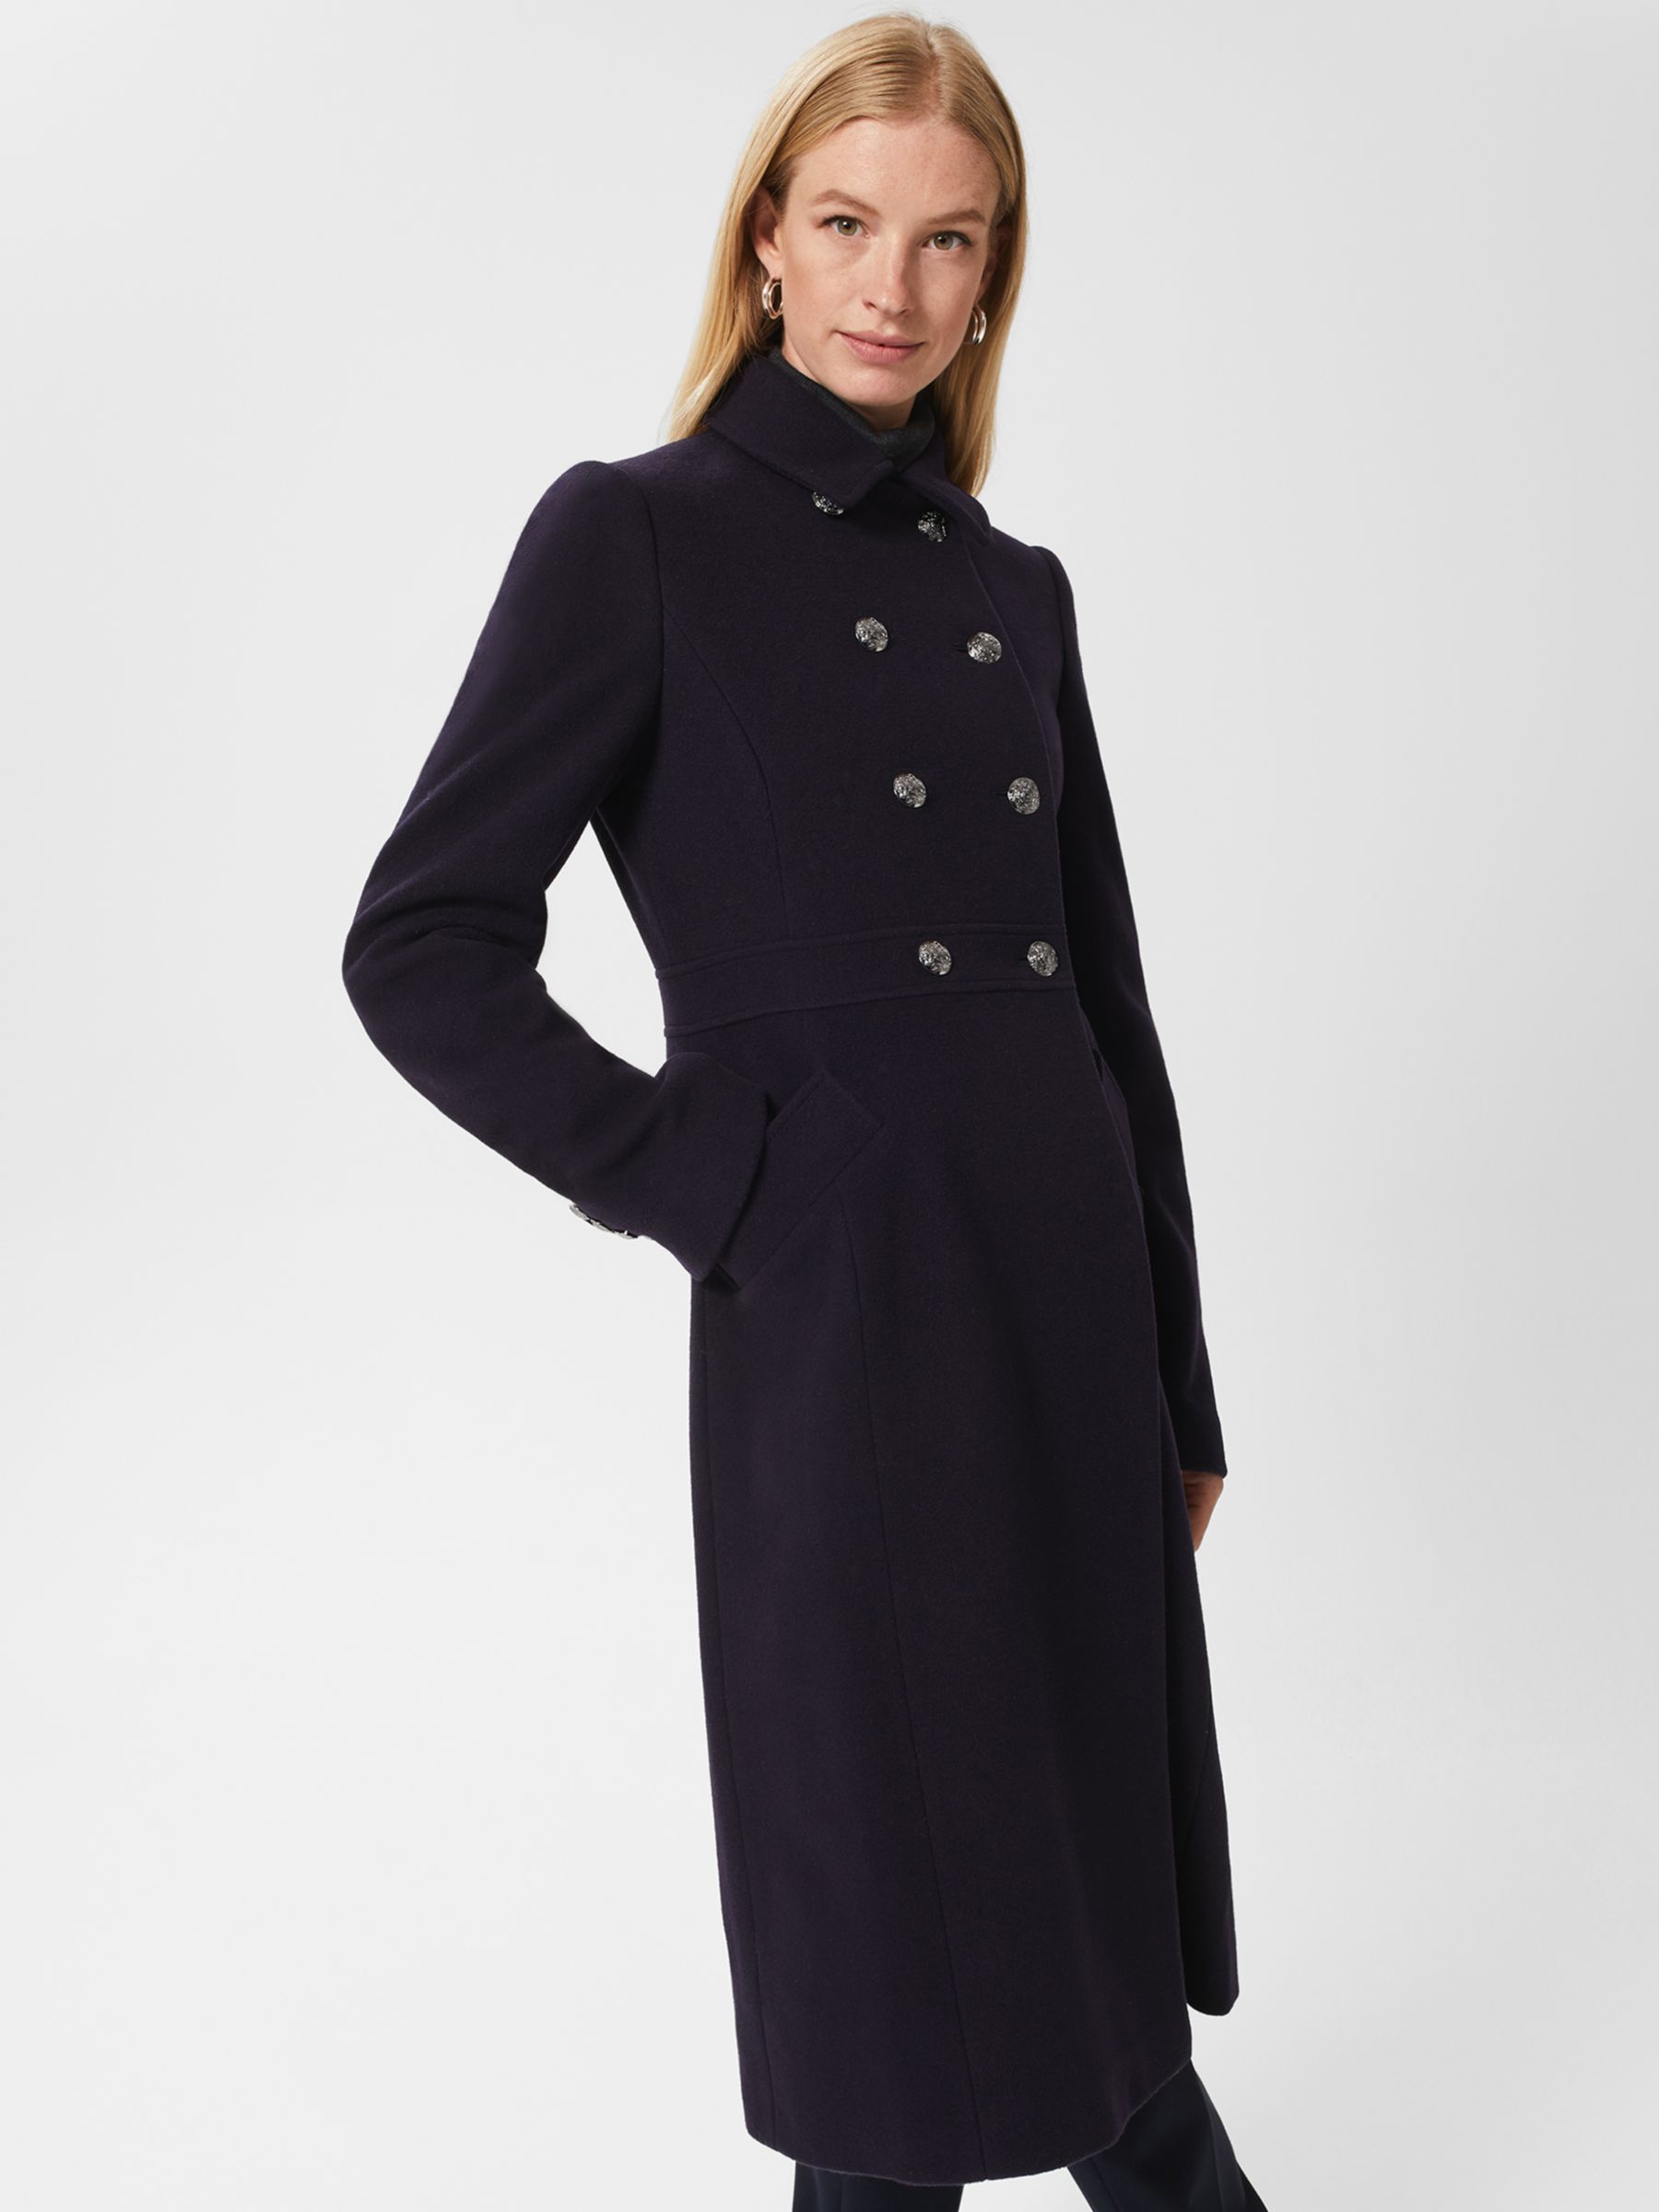 Hobbs Cindy Wool Blend Tailored Coat, Navy at John Lewis & Partners